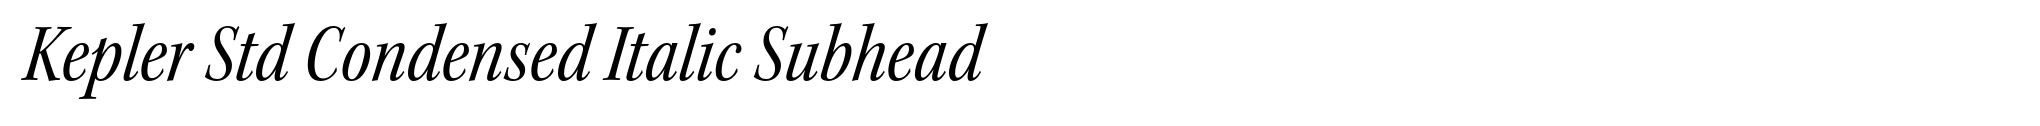 Kepler Std Condensed Italic Subhead image